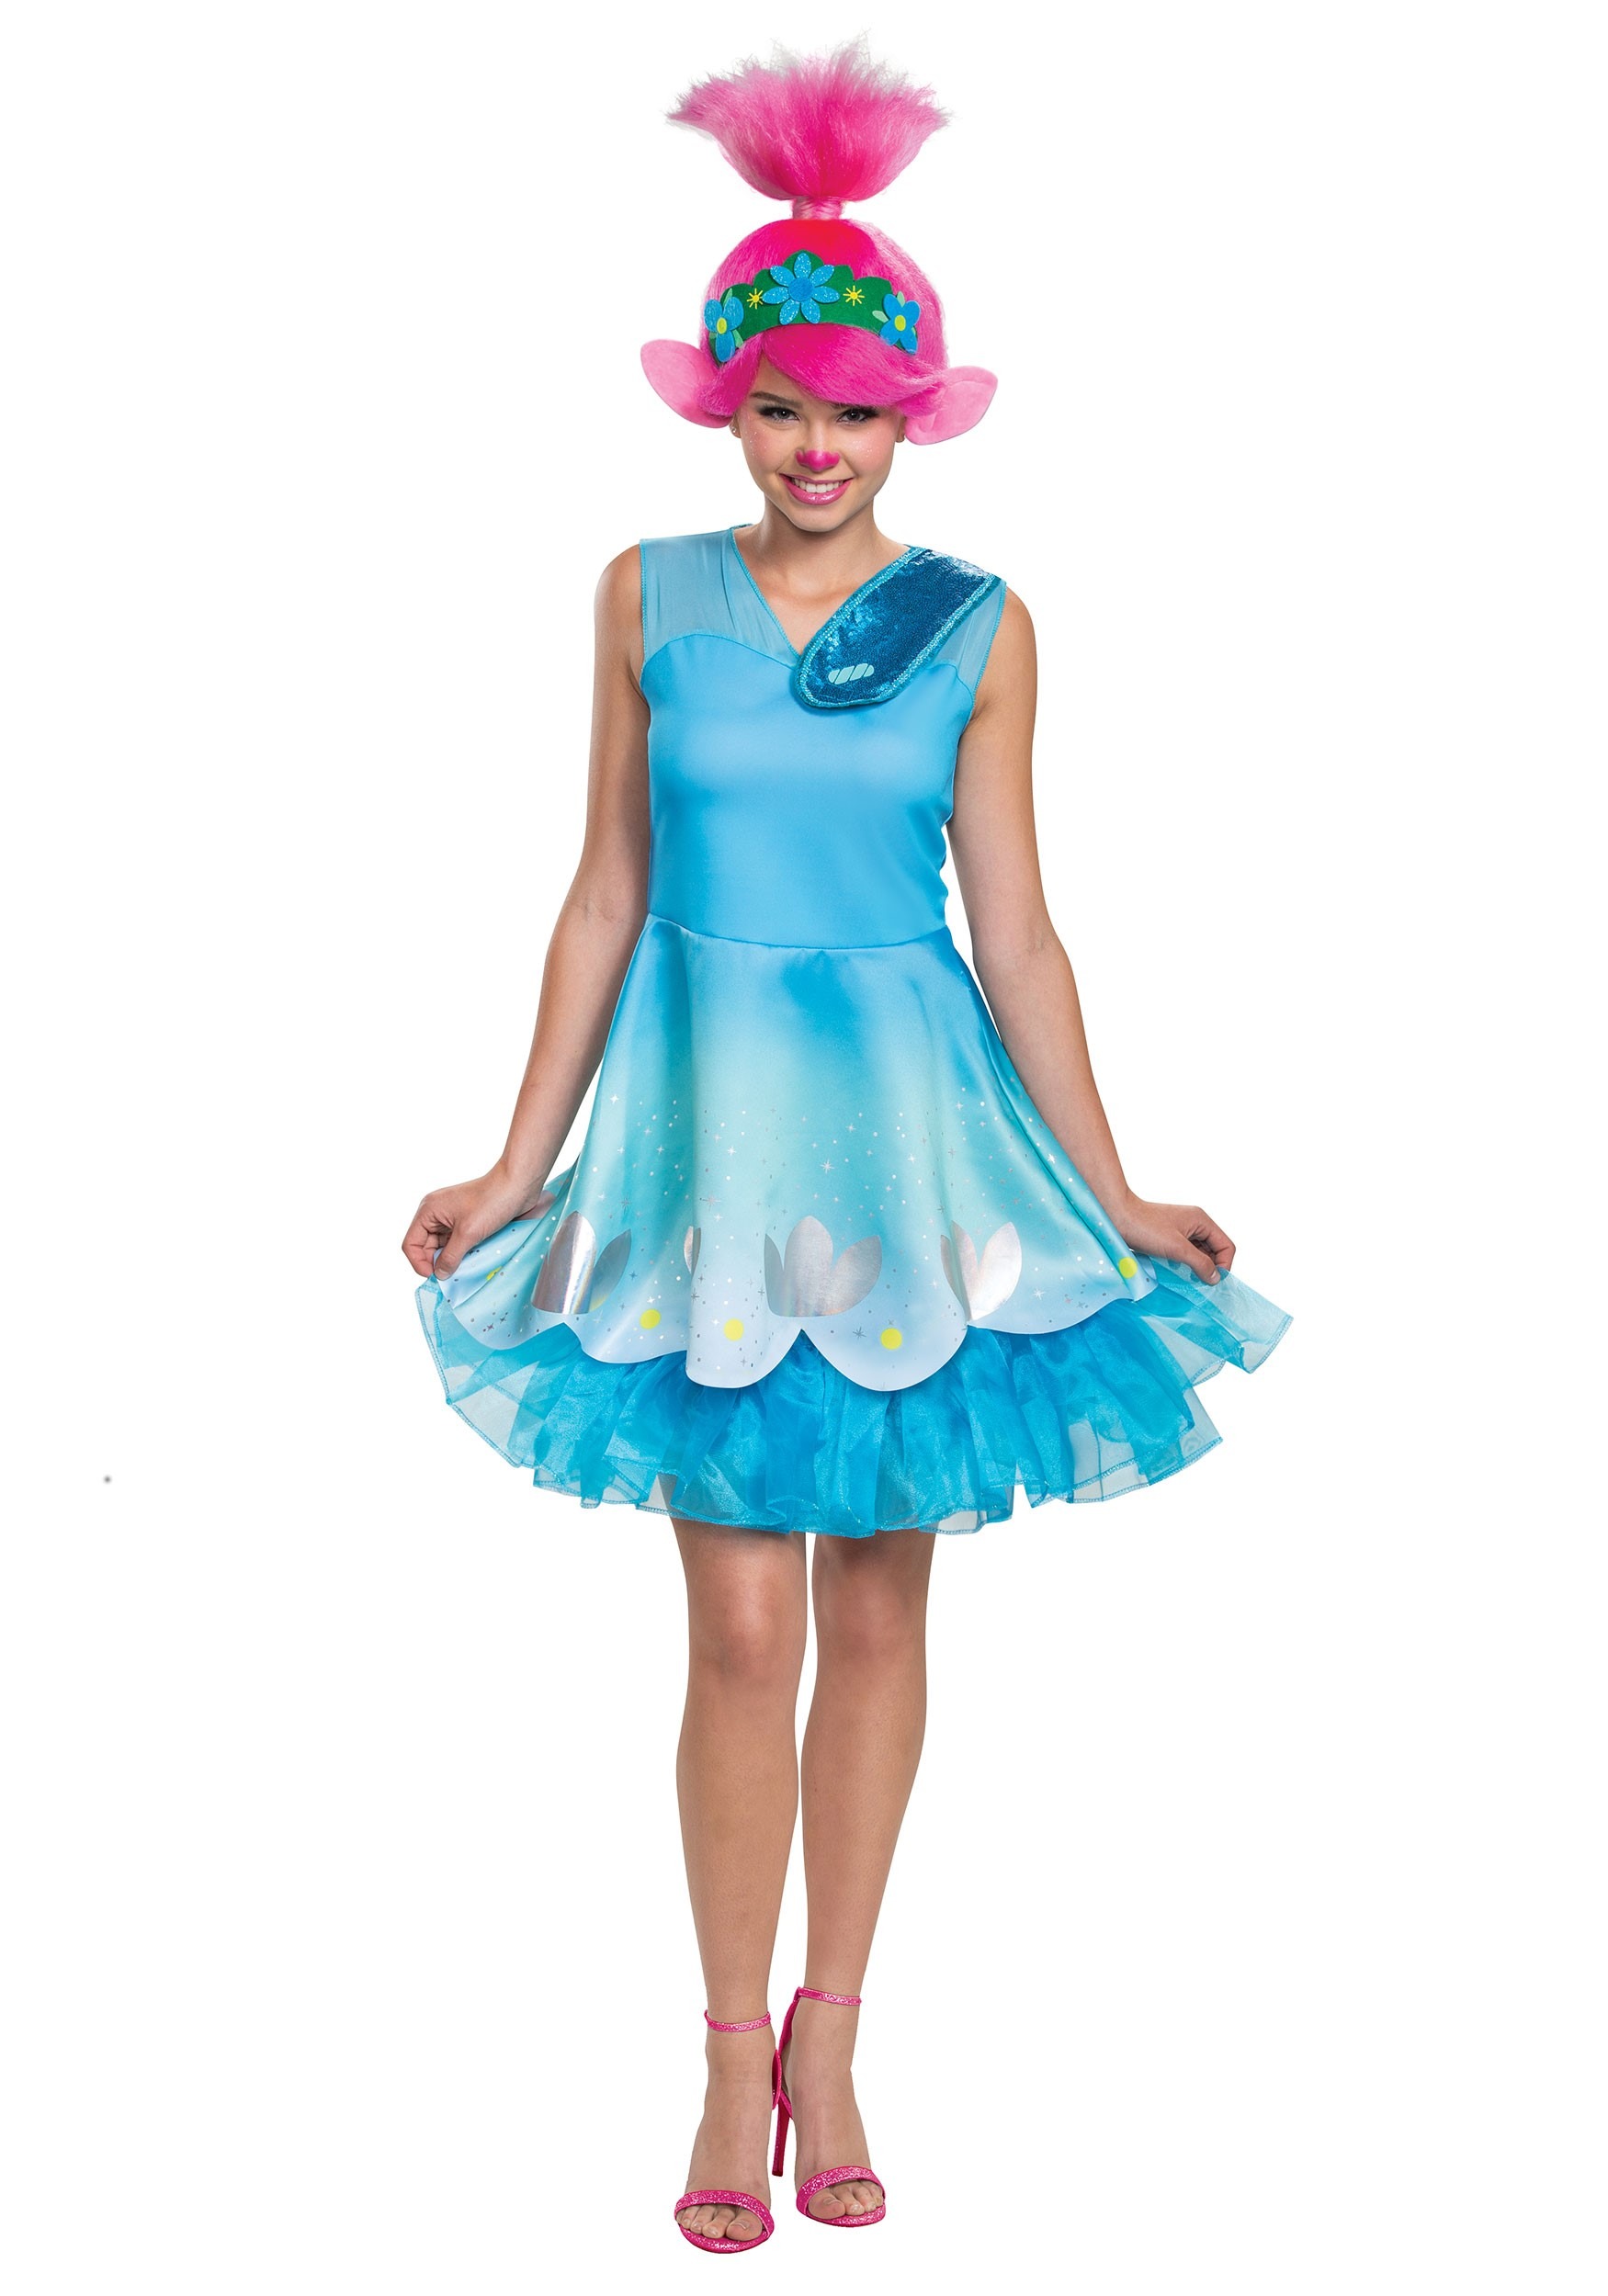 Photos - Fancy Dress Disguise Trolls World Tour Poppy Costume for Women Pink/Blue DI105189